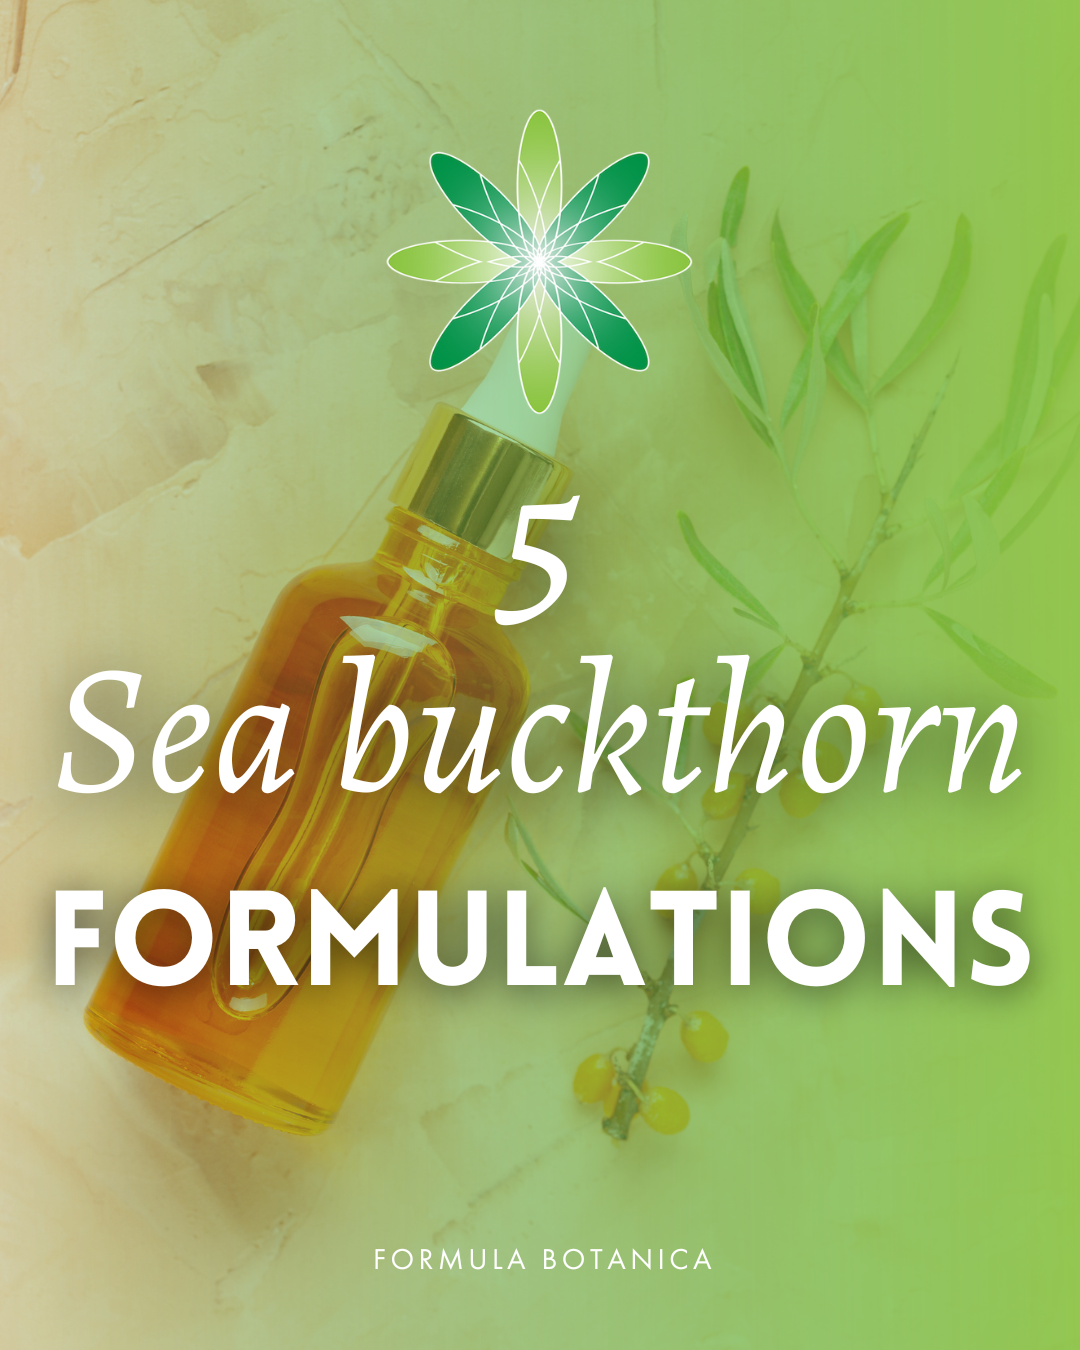 sea buckthorn formulations